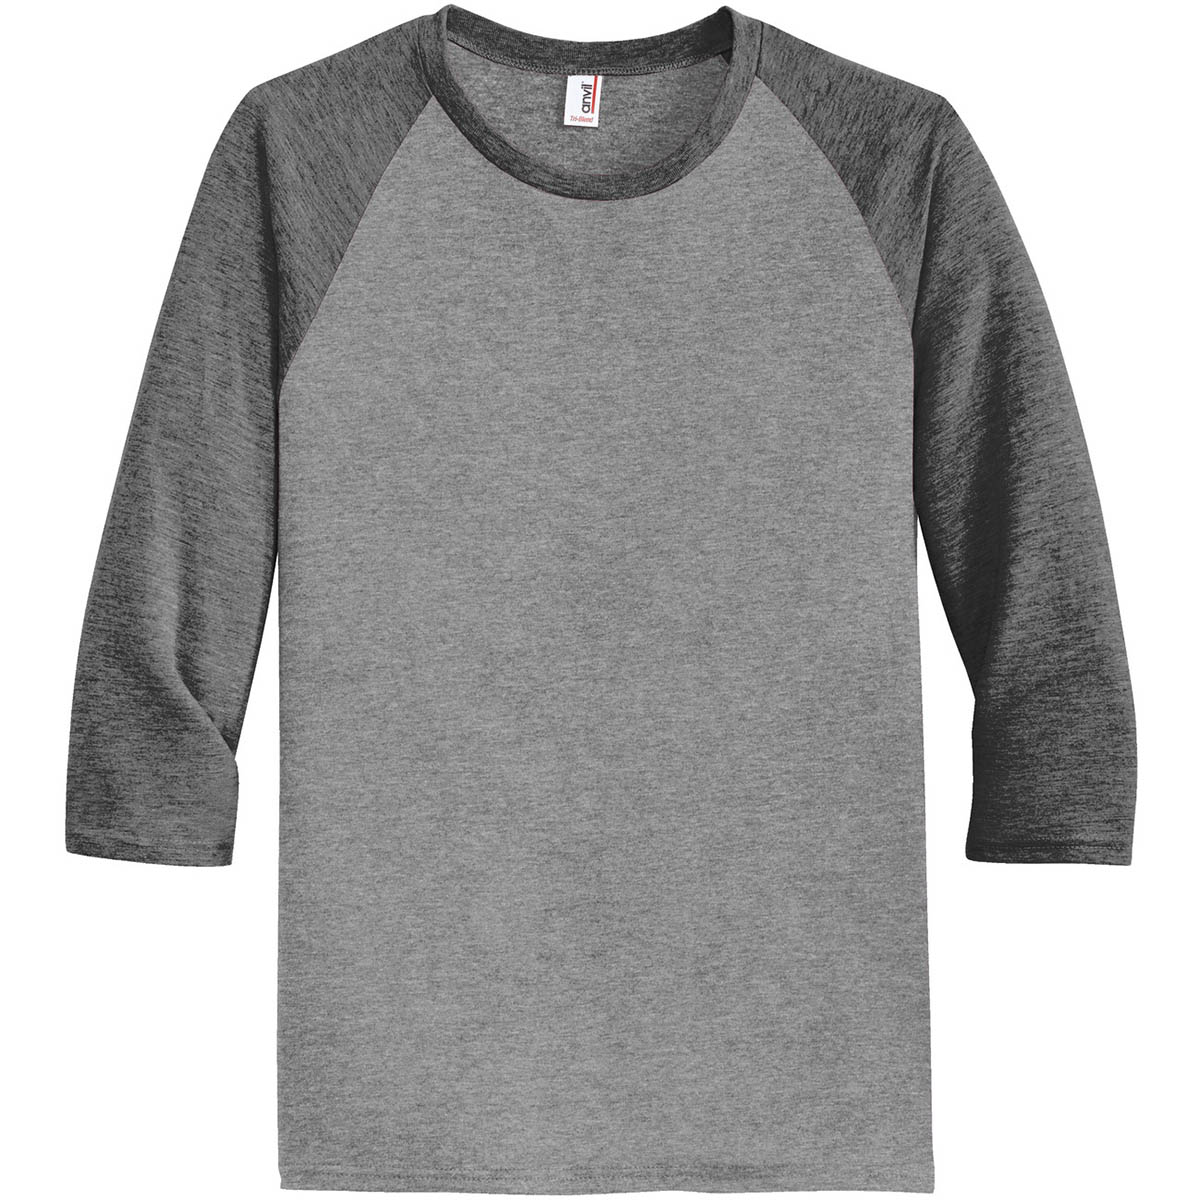 grey raglan shirt